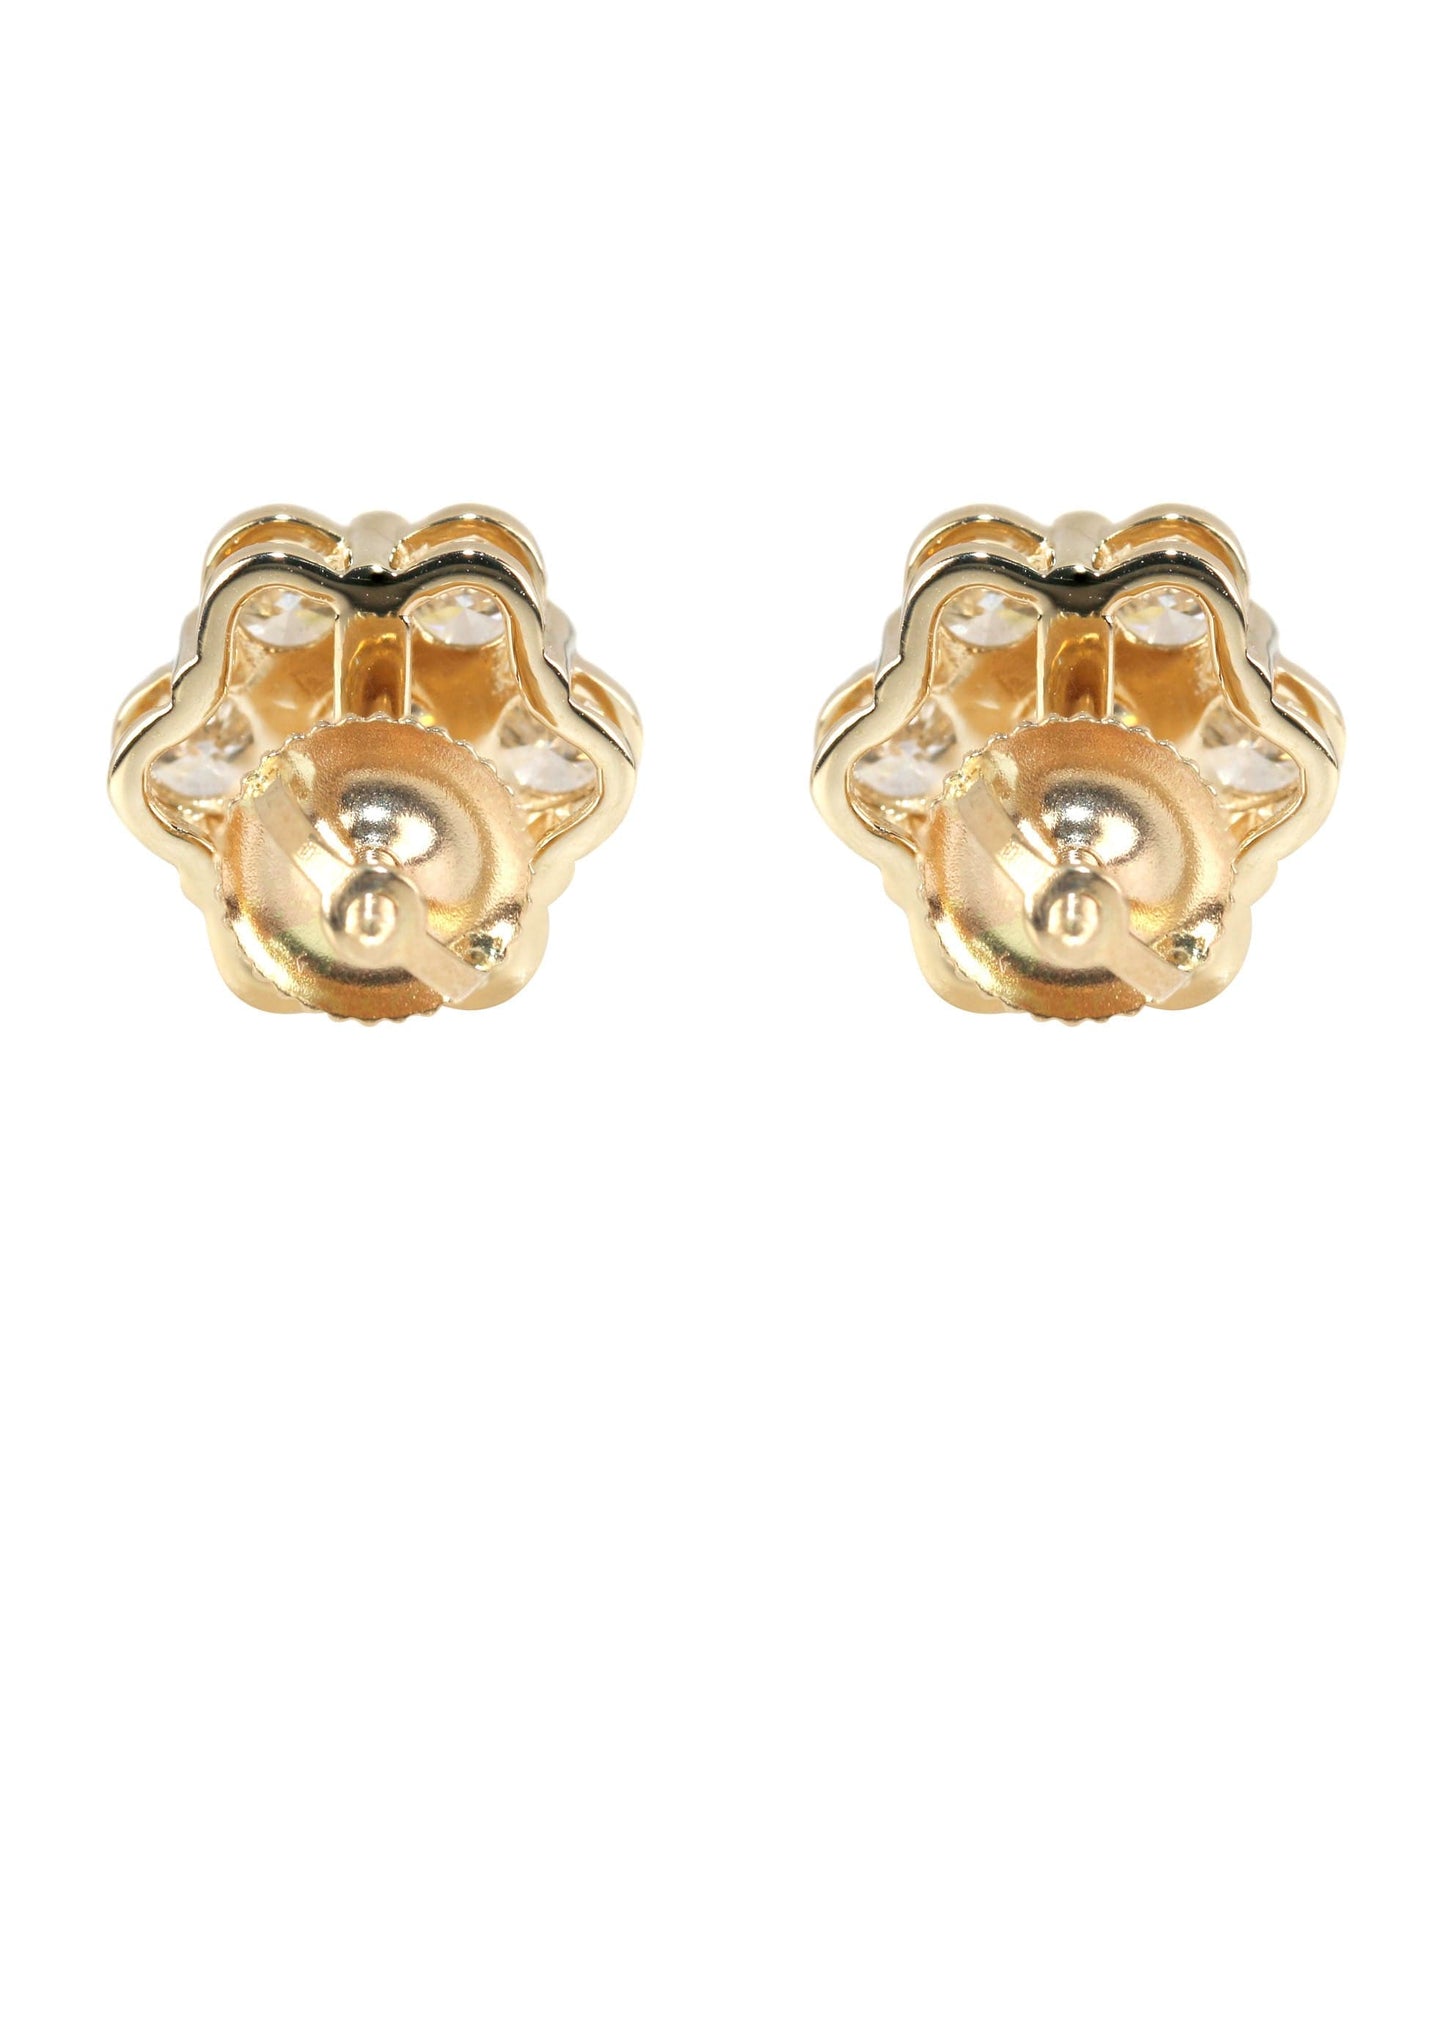 14K Yellow Gold Stud Diamond Earrings 2.53 CT